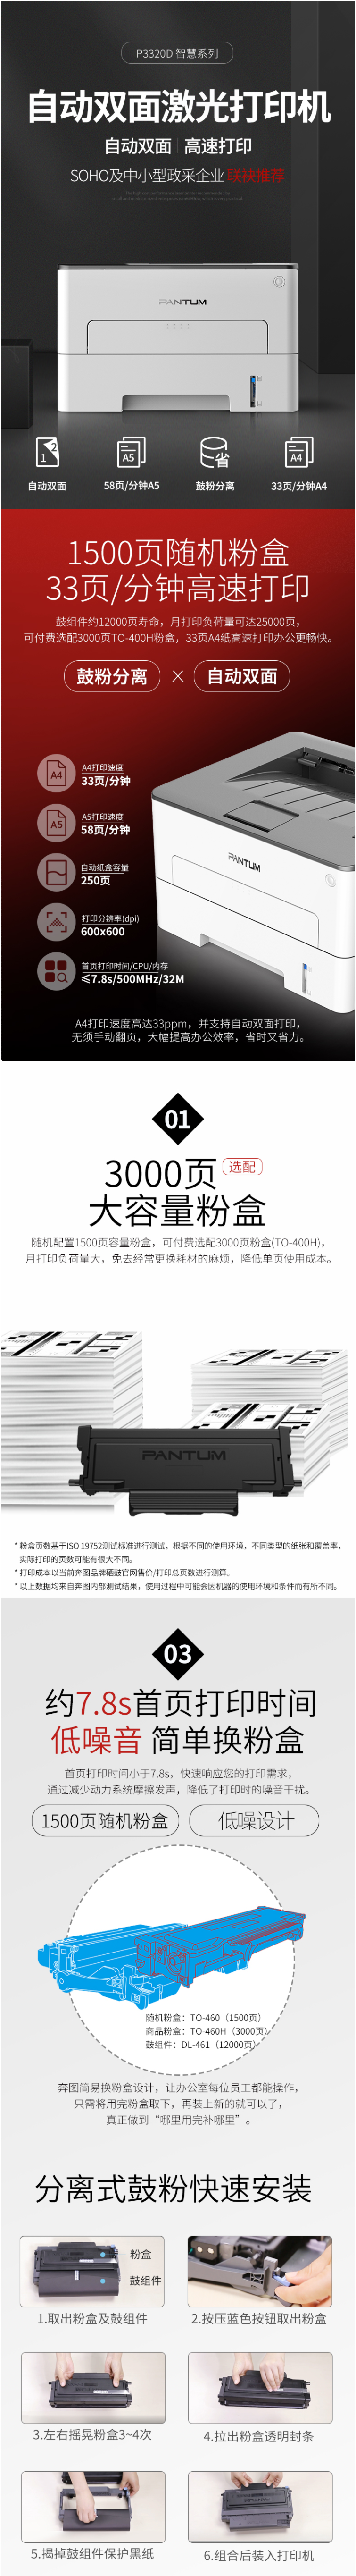 FireShot Capture 369 - 【奔图P3320D】奔图 PANTUM P3320D 黑白激光 自动双面 单功能打印机【行情 报价 价格 评测】-京东 - item.jd.com.png